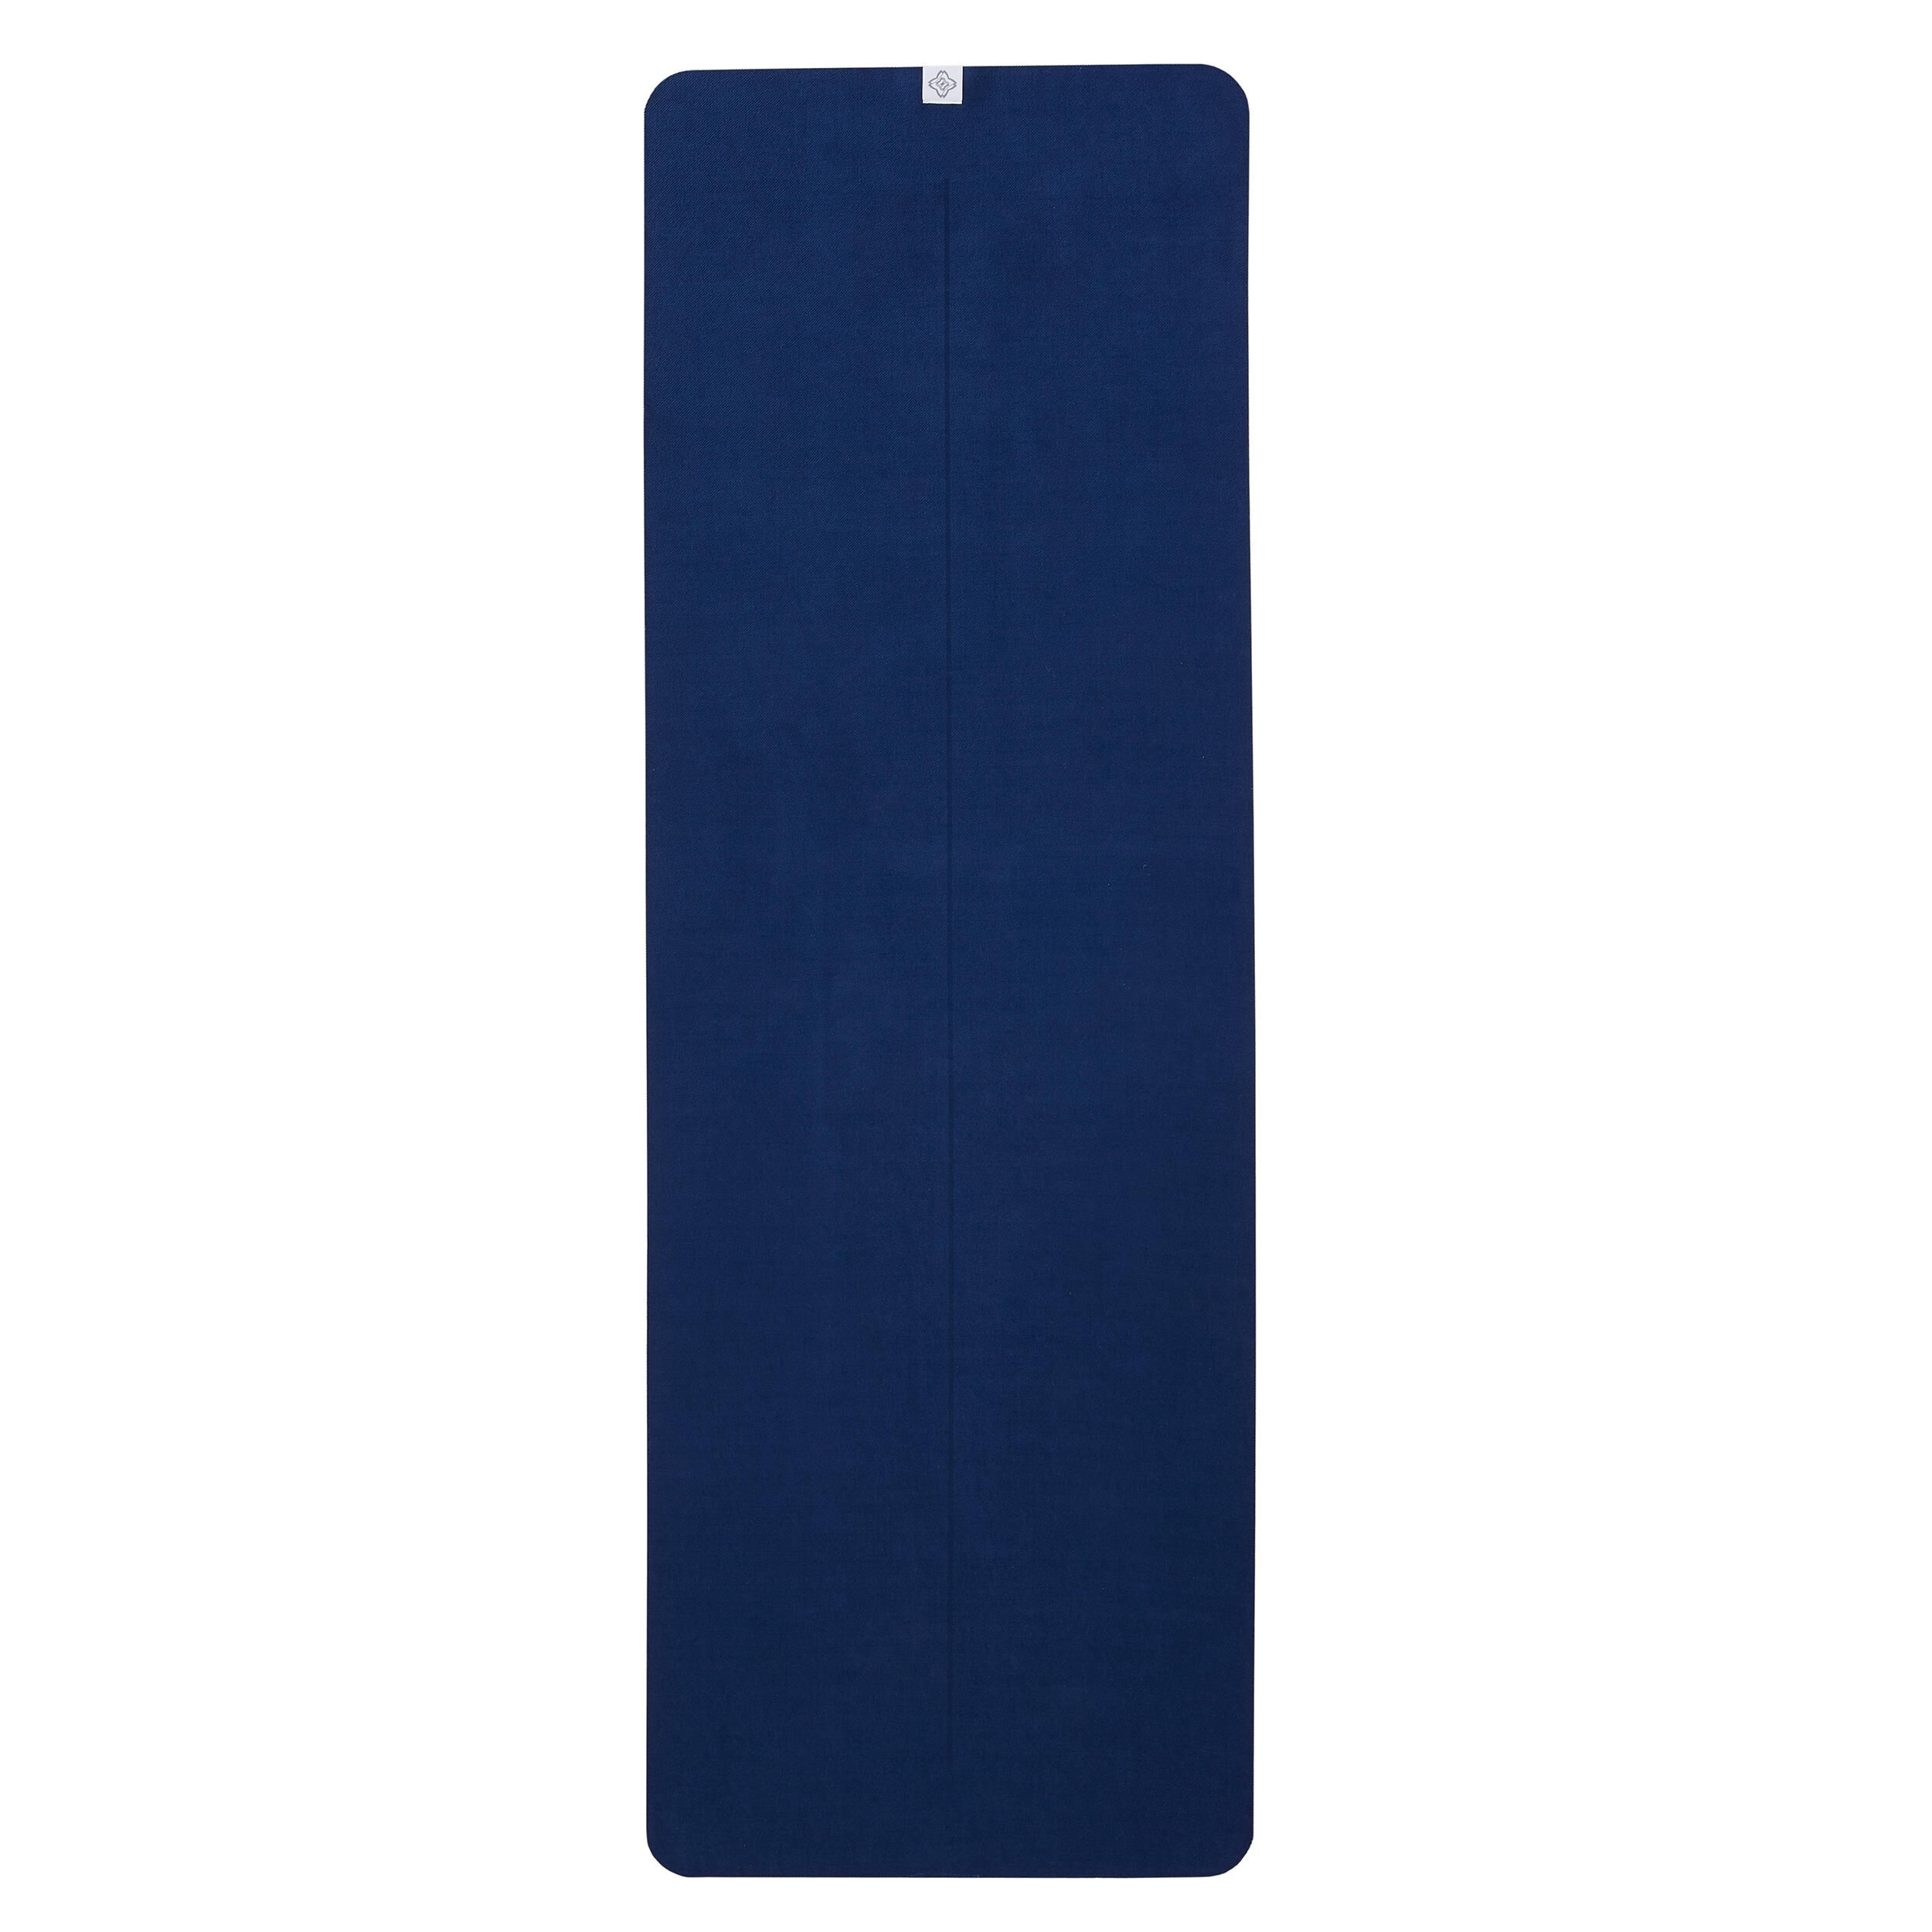 KIMJALY Non-Slip Yoga Towel 183 cm ⨯ 61 cm ⨯ 1 mm - Grey/Blue